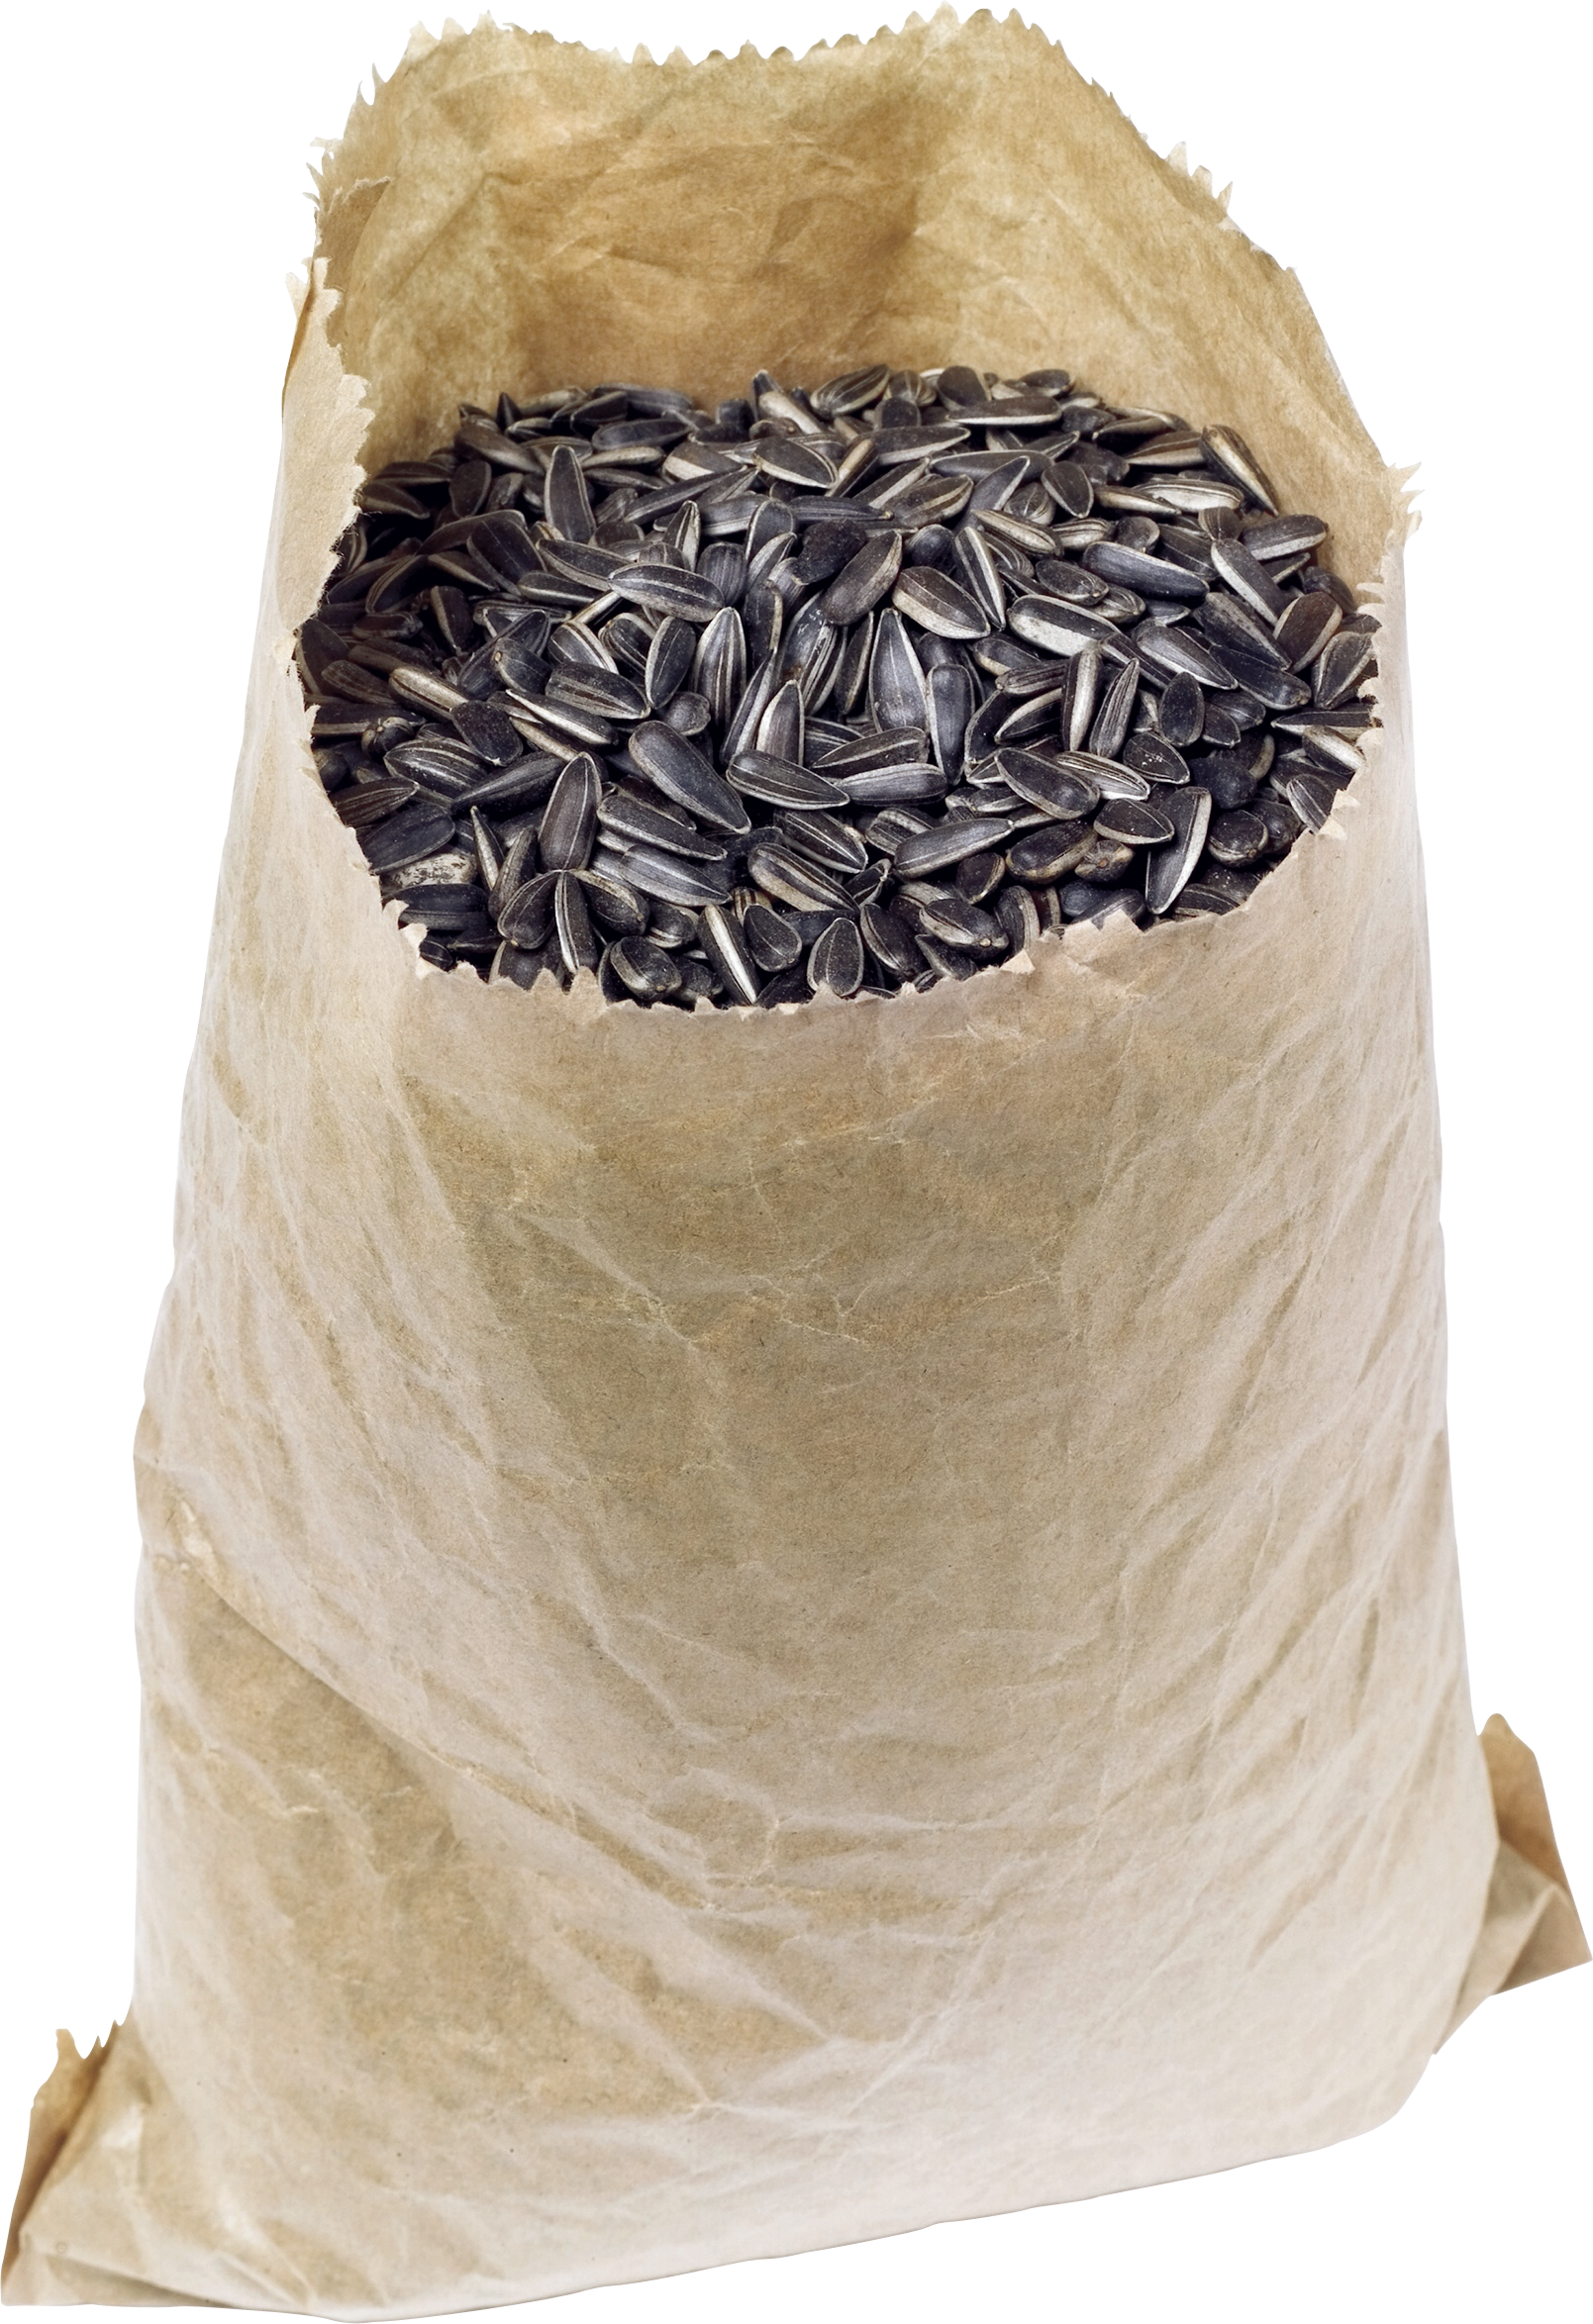 Um saco de sementes de girassol e sementes de girassol